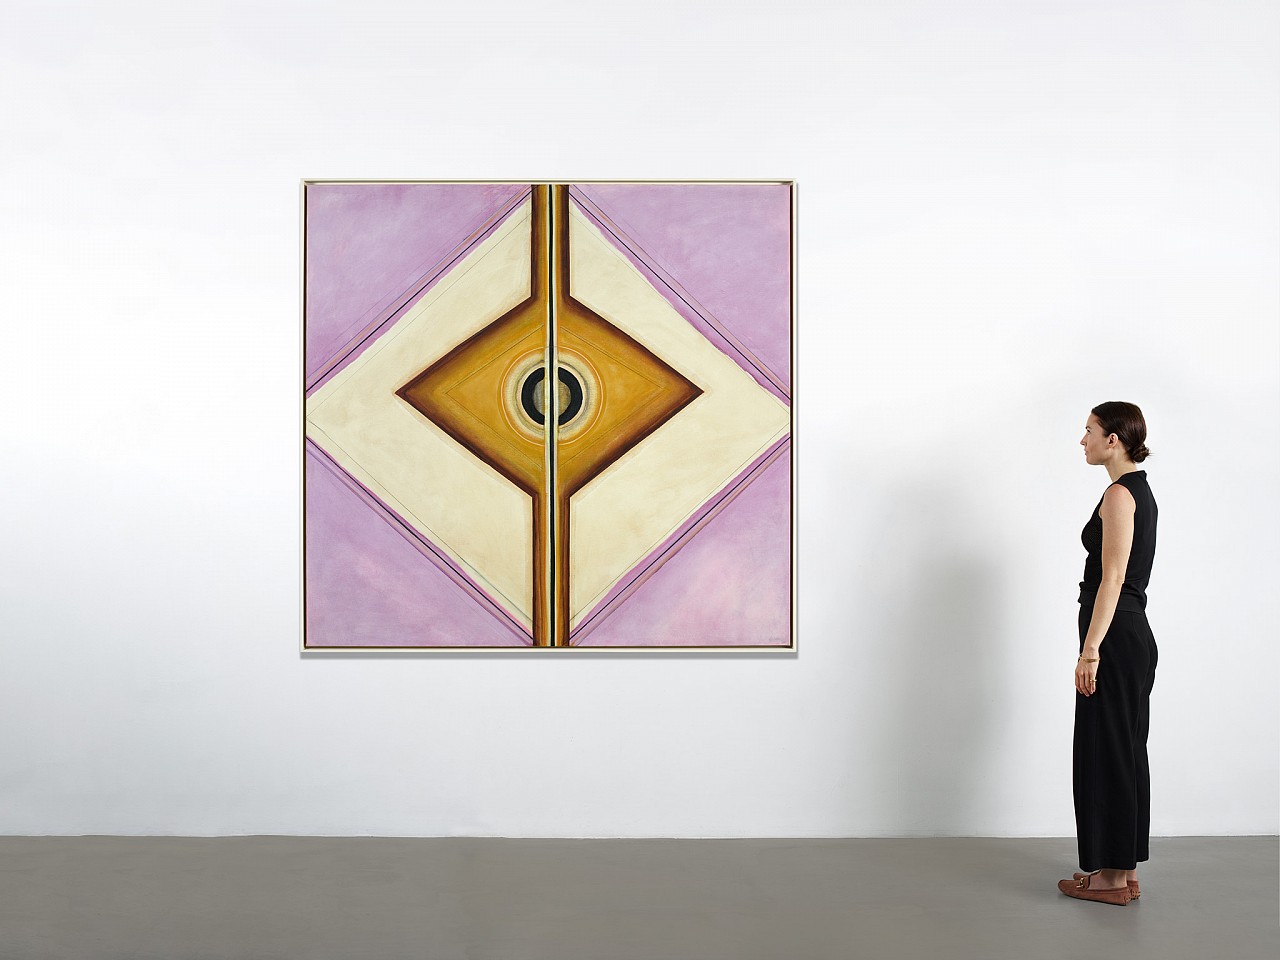 Ida Kohlmeyer, Cloistered #5, 1968
Mixed media on canvas, 68 x 71 in. (172.7 x 172.7 cm)
KOH-00012